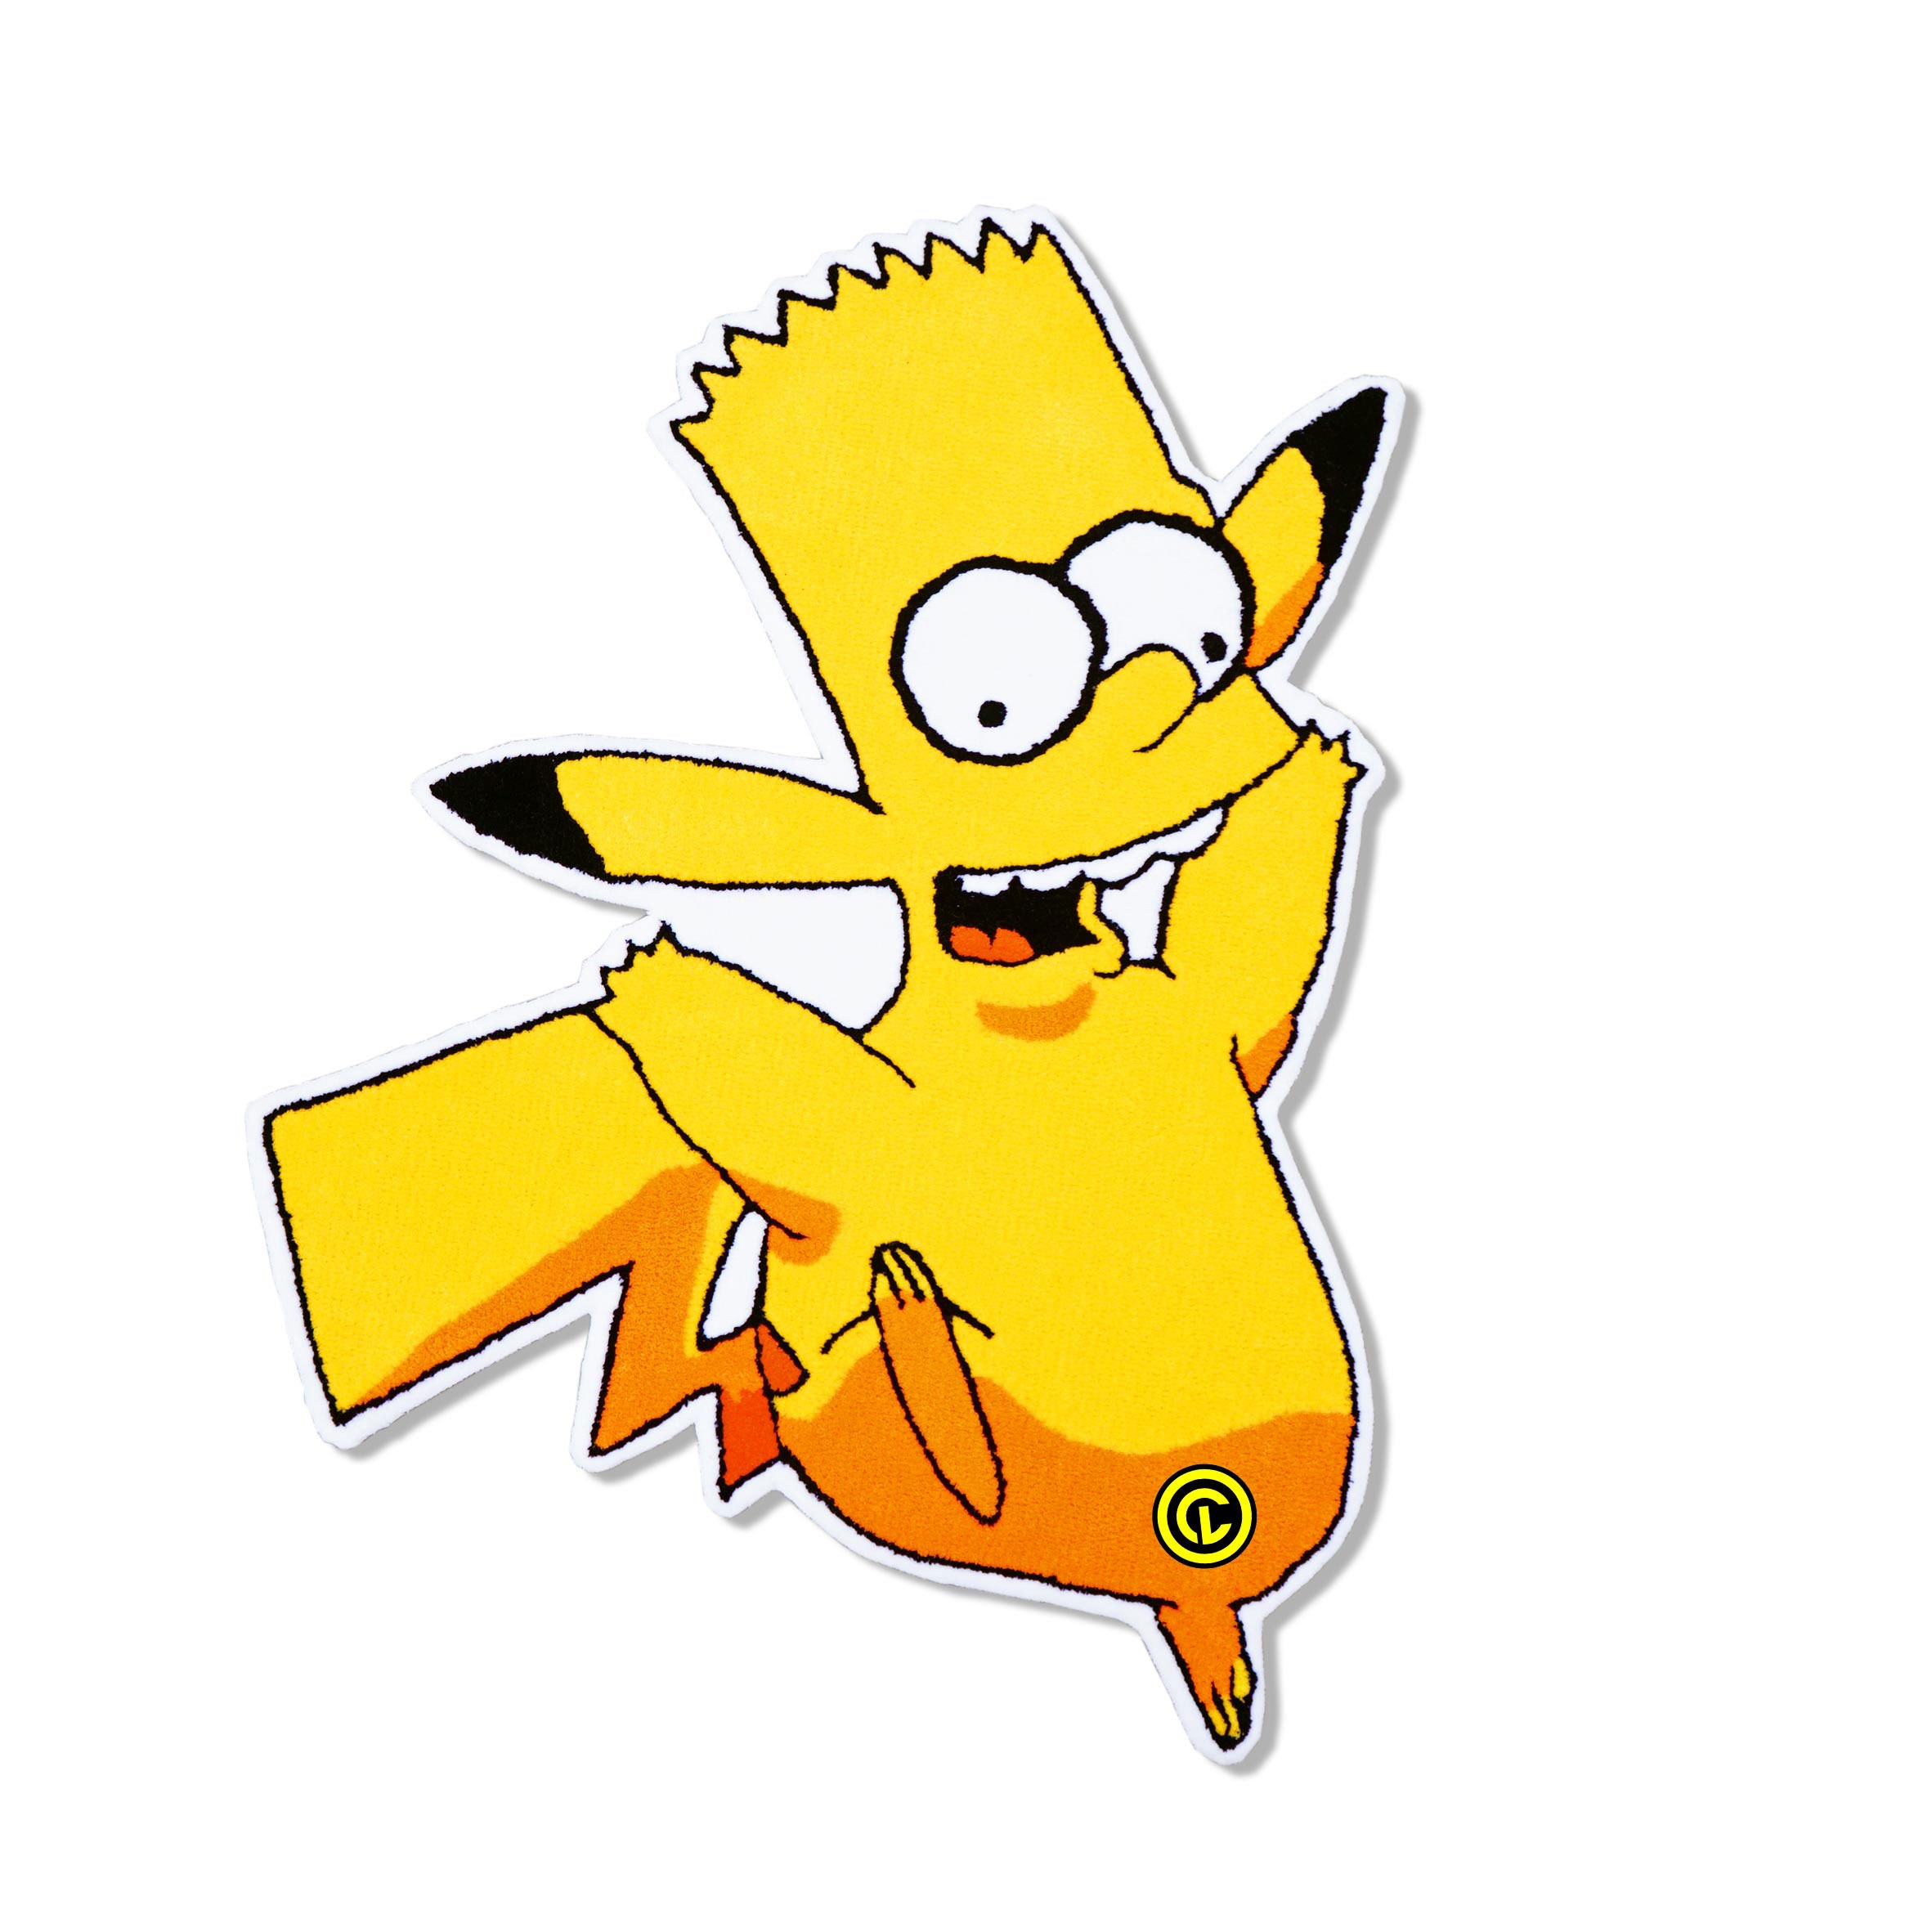 Bart x Pikachu Collaboration Rug 